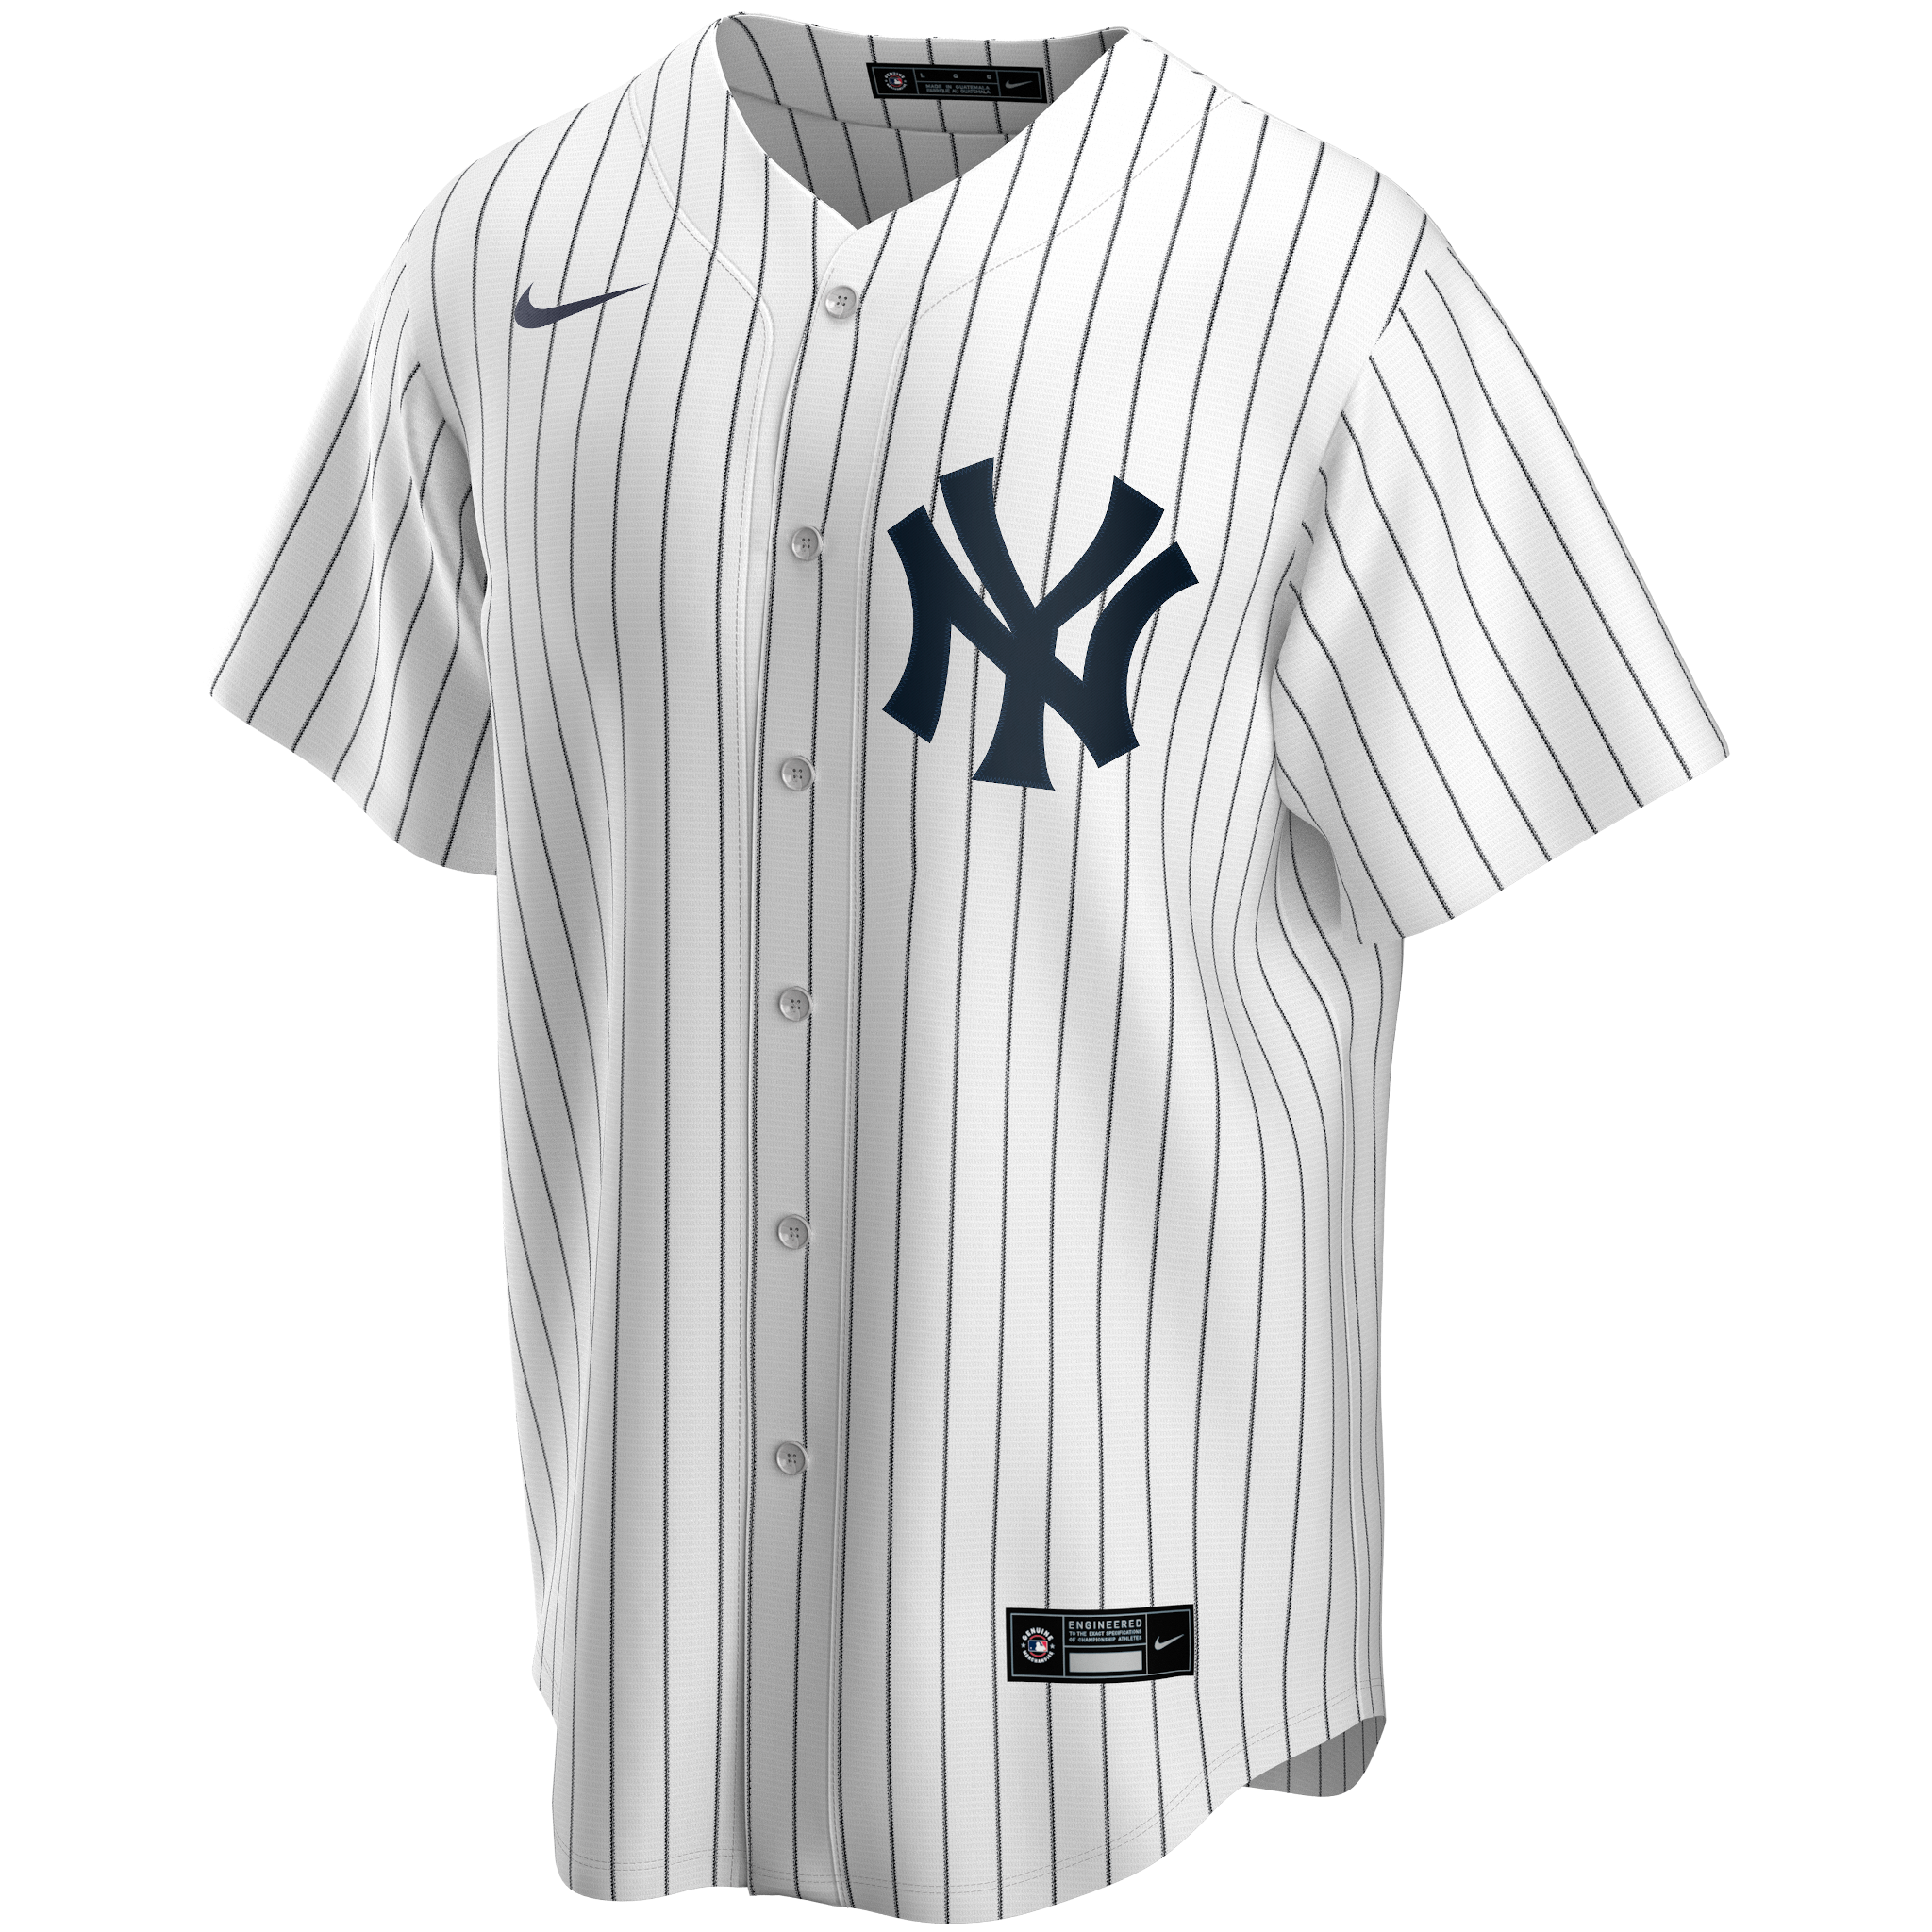 Don Mattingly New York Yankees Jersey white – Classic Authentics